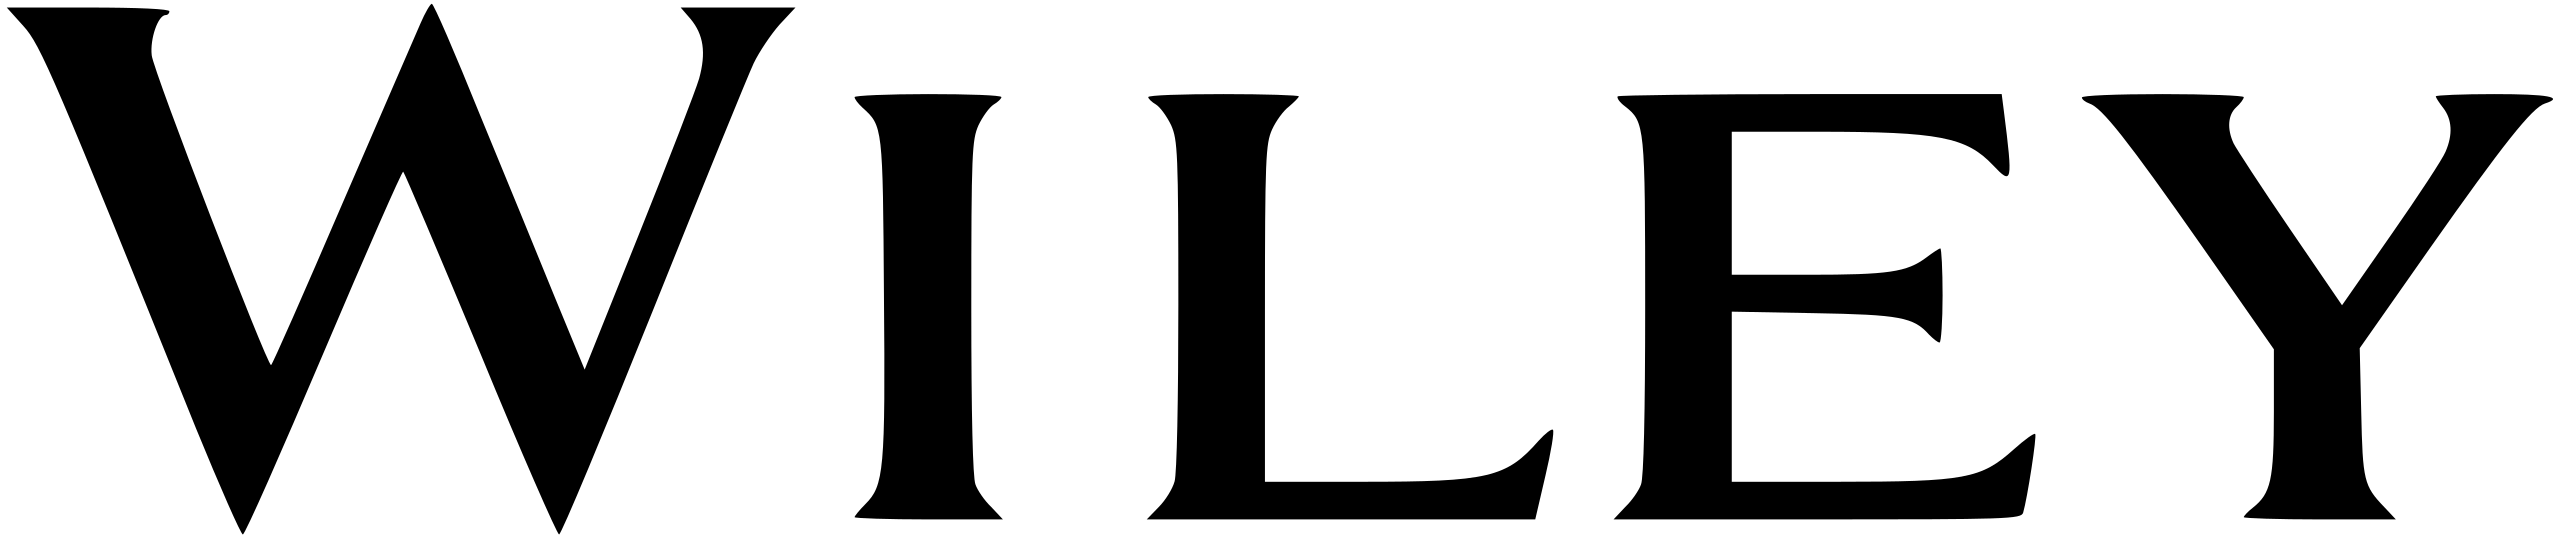 2560px-Wiley logo.svg